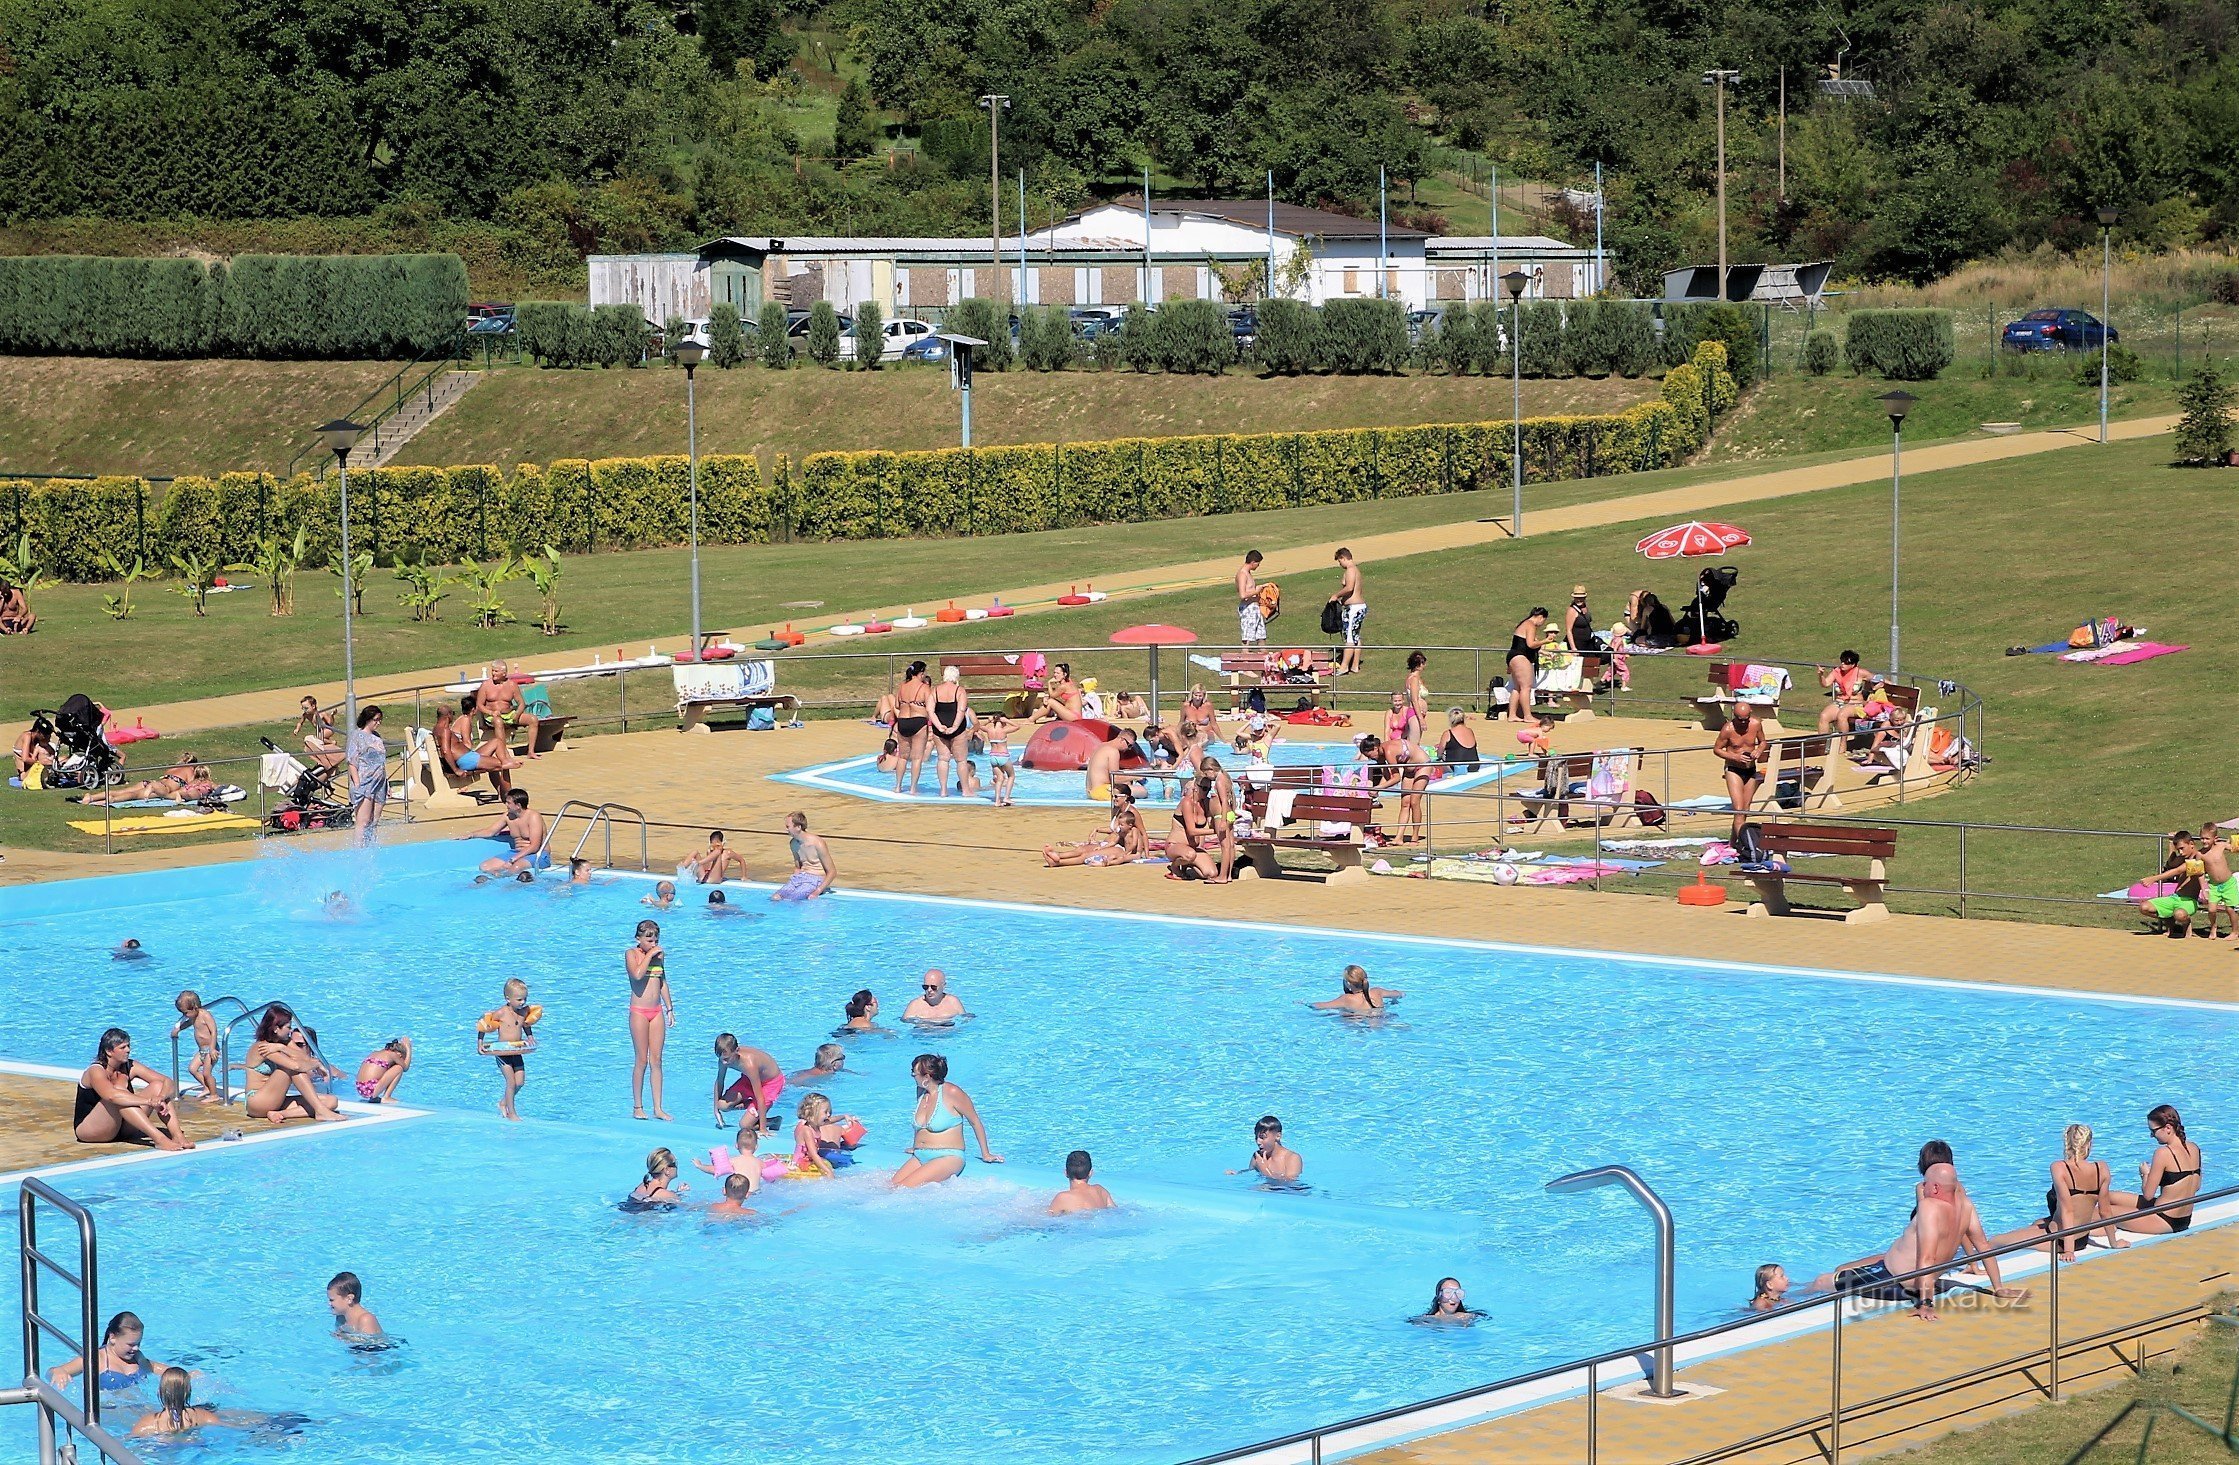 Bučovice - zwembad in 2017